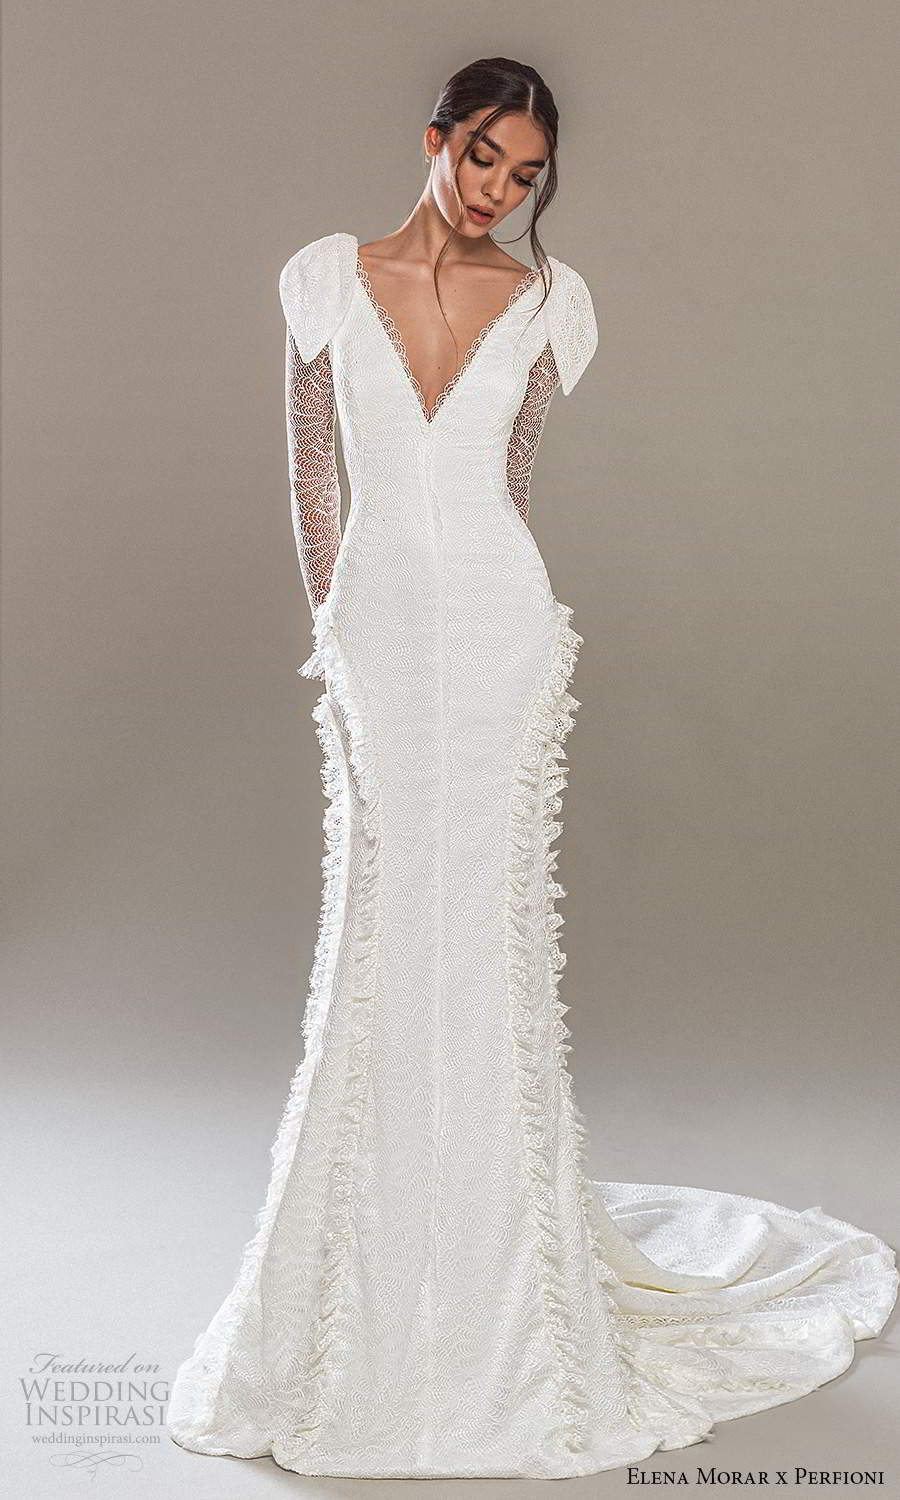 elena morar perfioni 2021 bridal sheer long sleeves v neckline embellished lace sheath wedding dress chapel train (27) mv